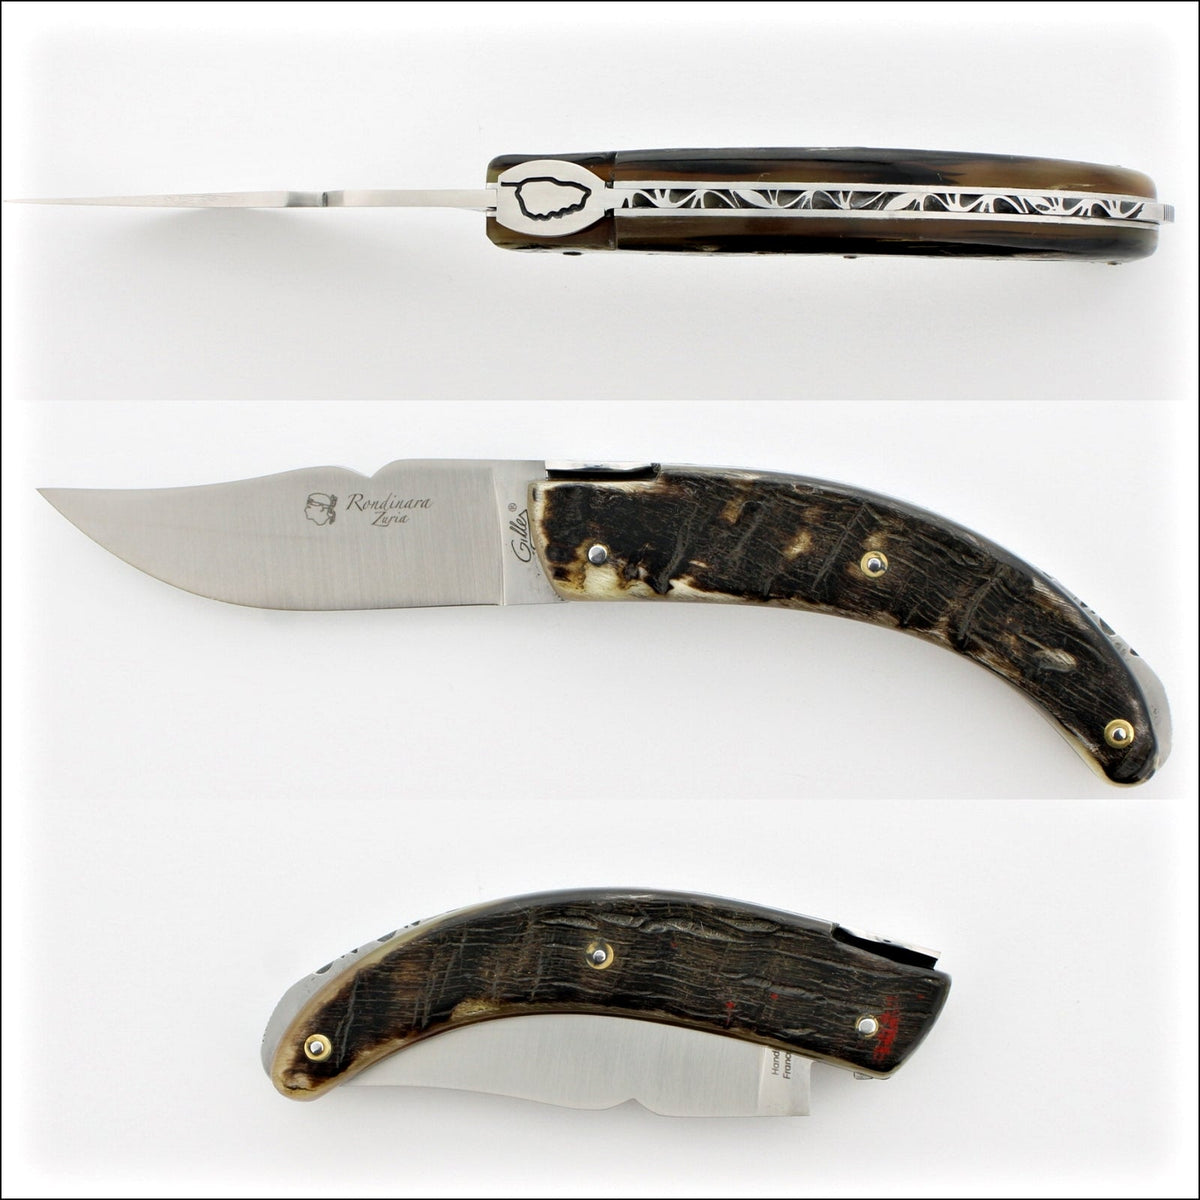 Corsican Rondinara Full Handle Folding Knife - Dark Ram Horn Tip